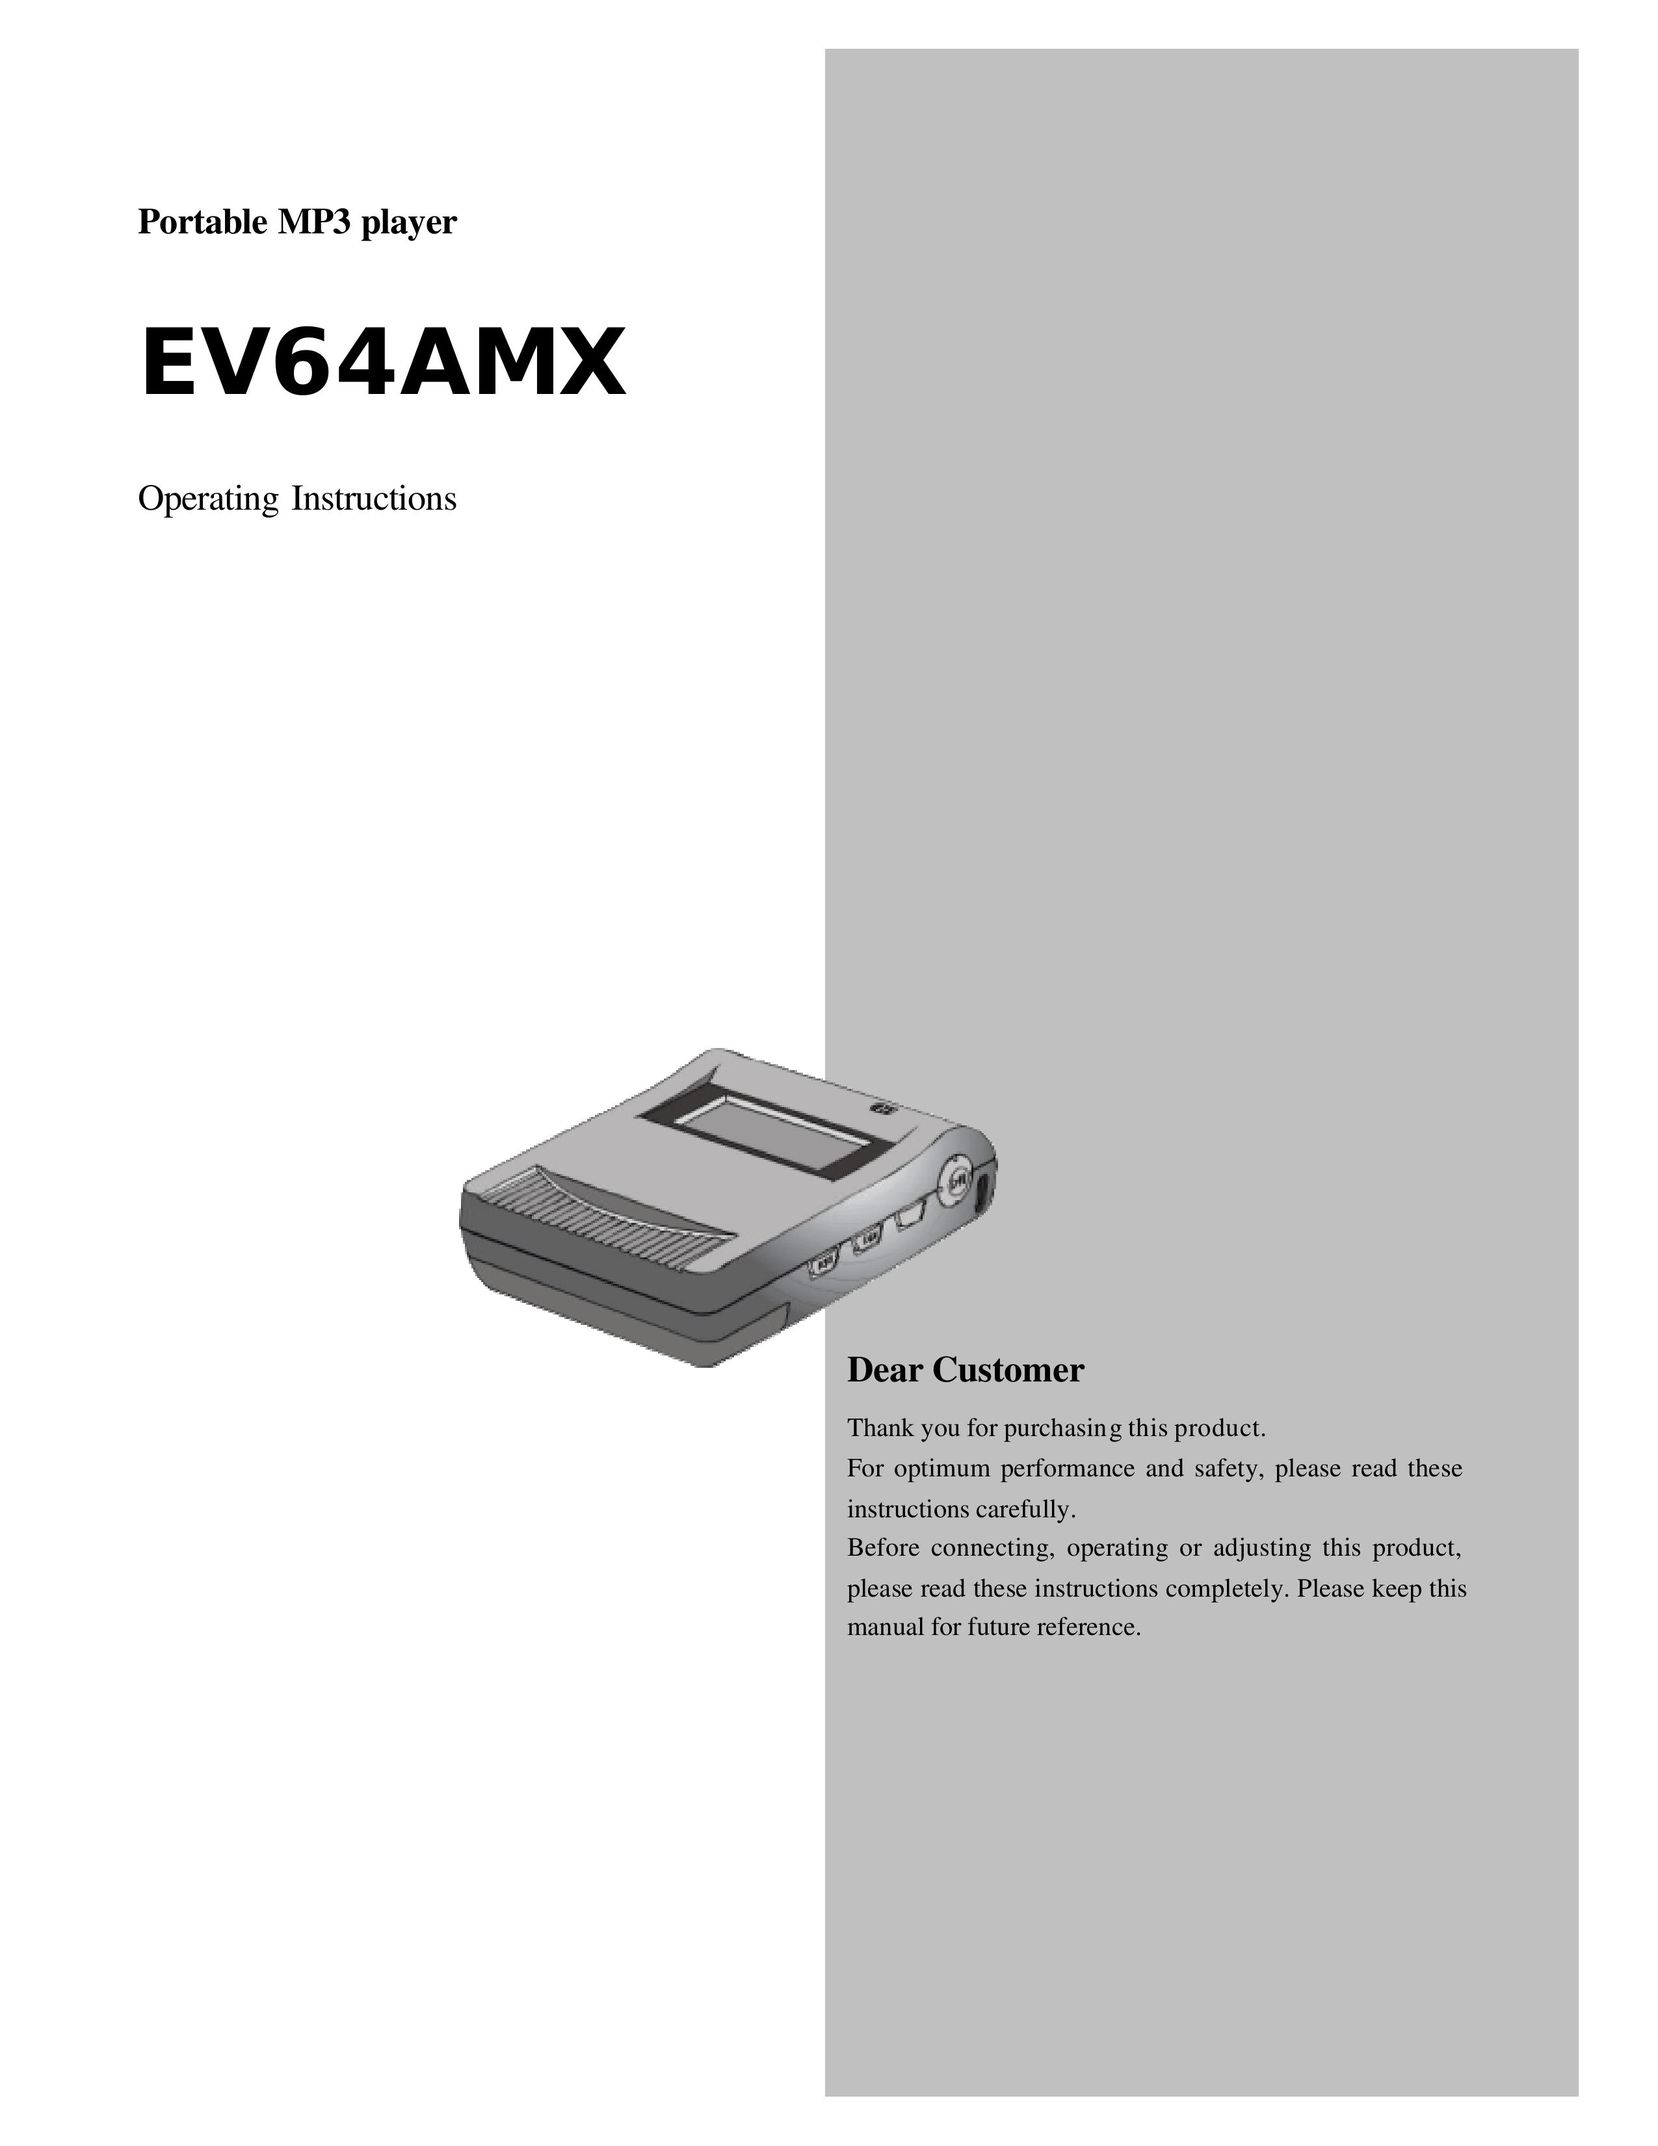 Evolution Technologies EV64AMX MP3 Player User Manual